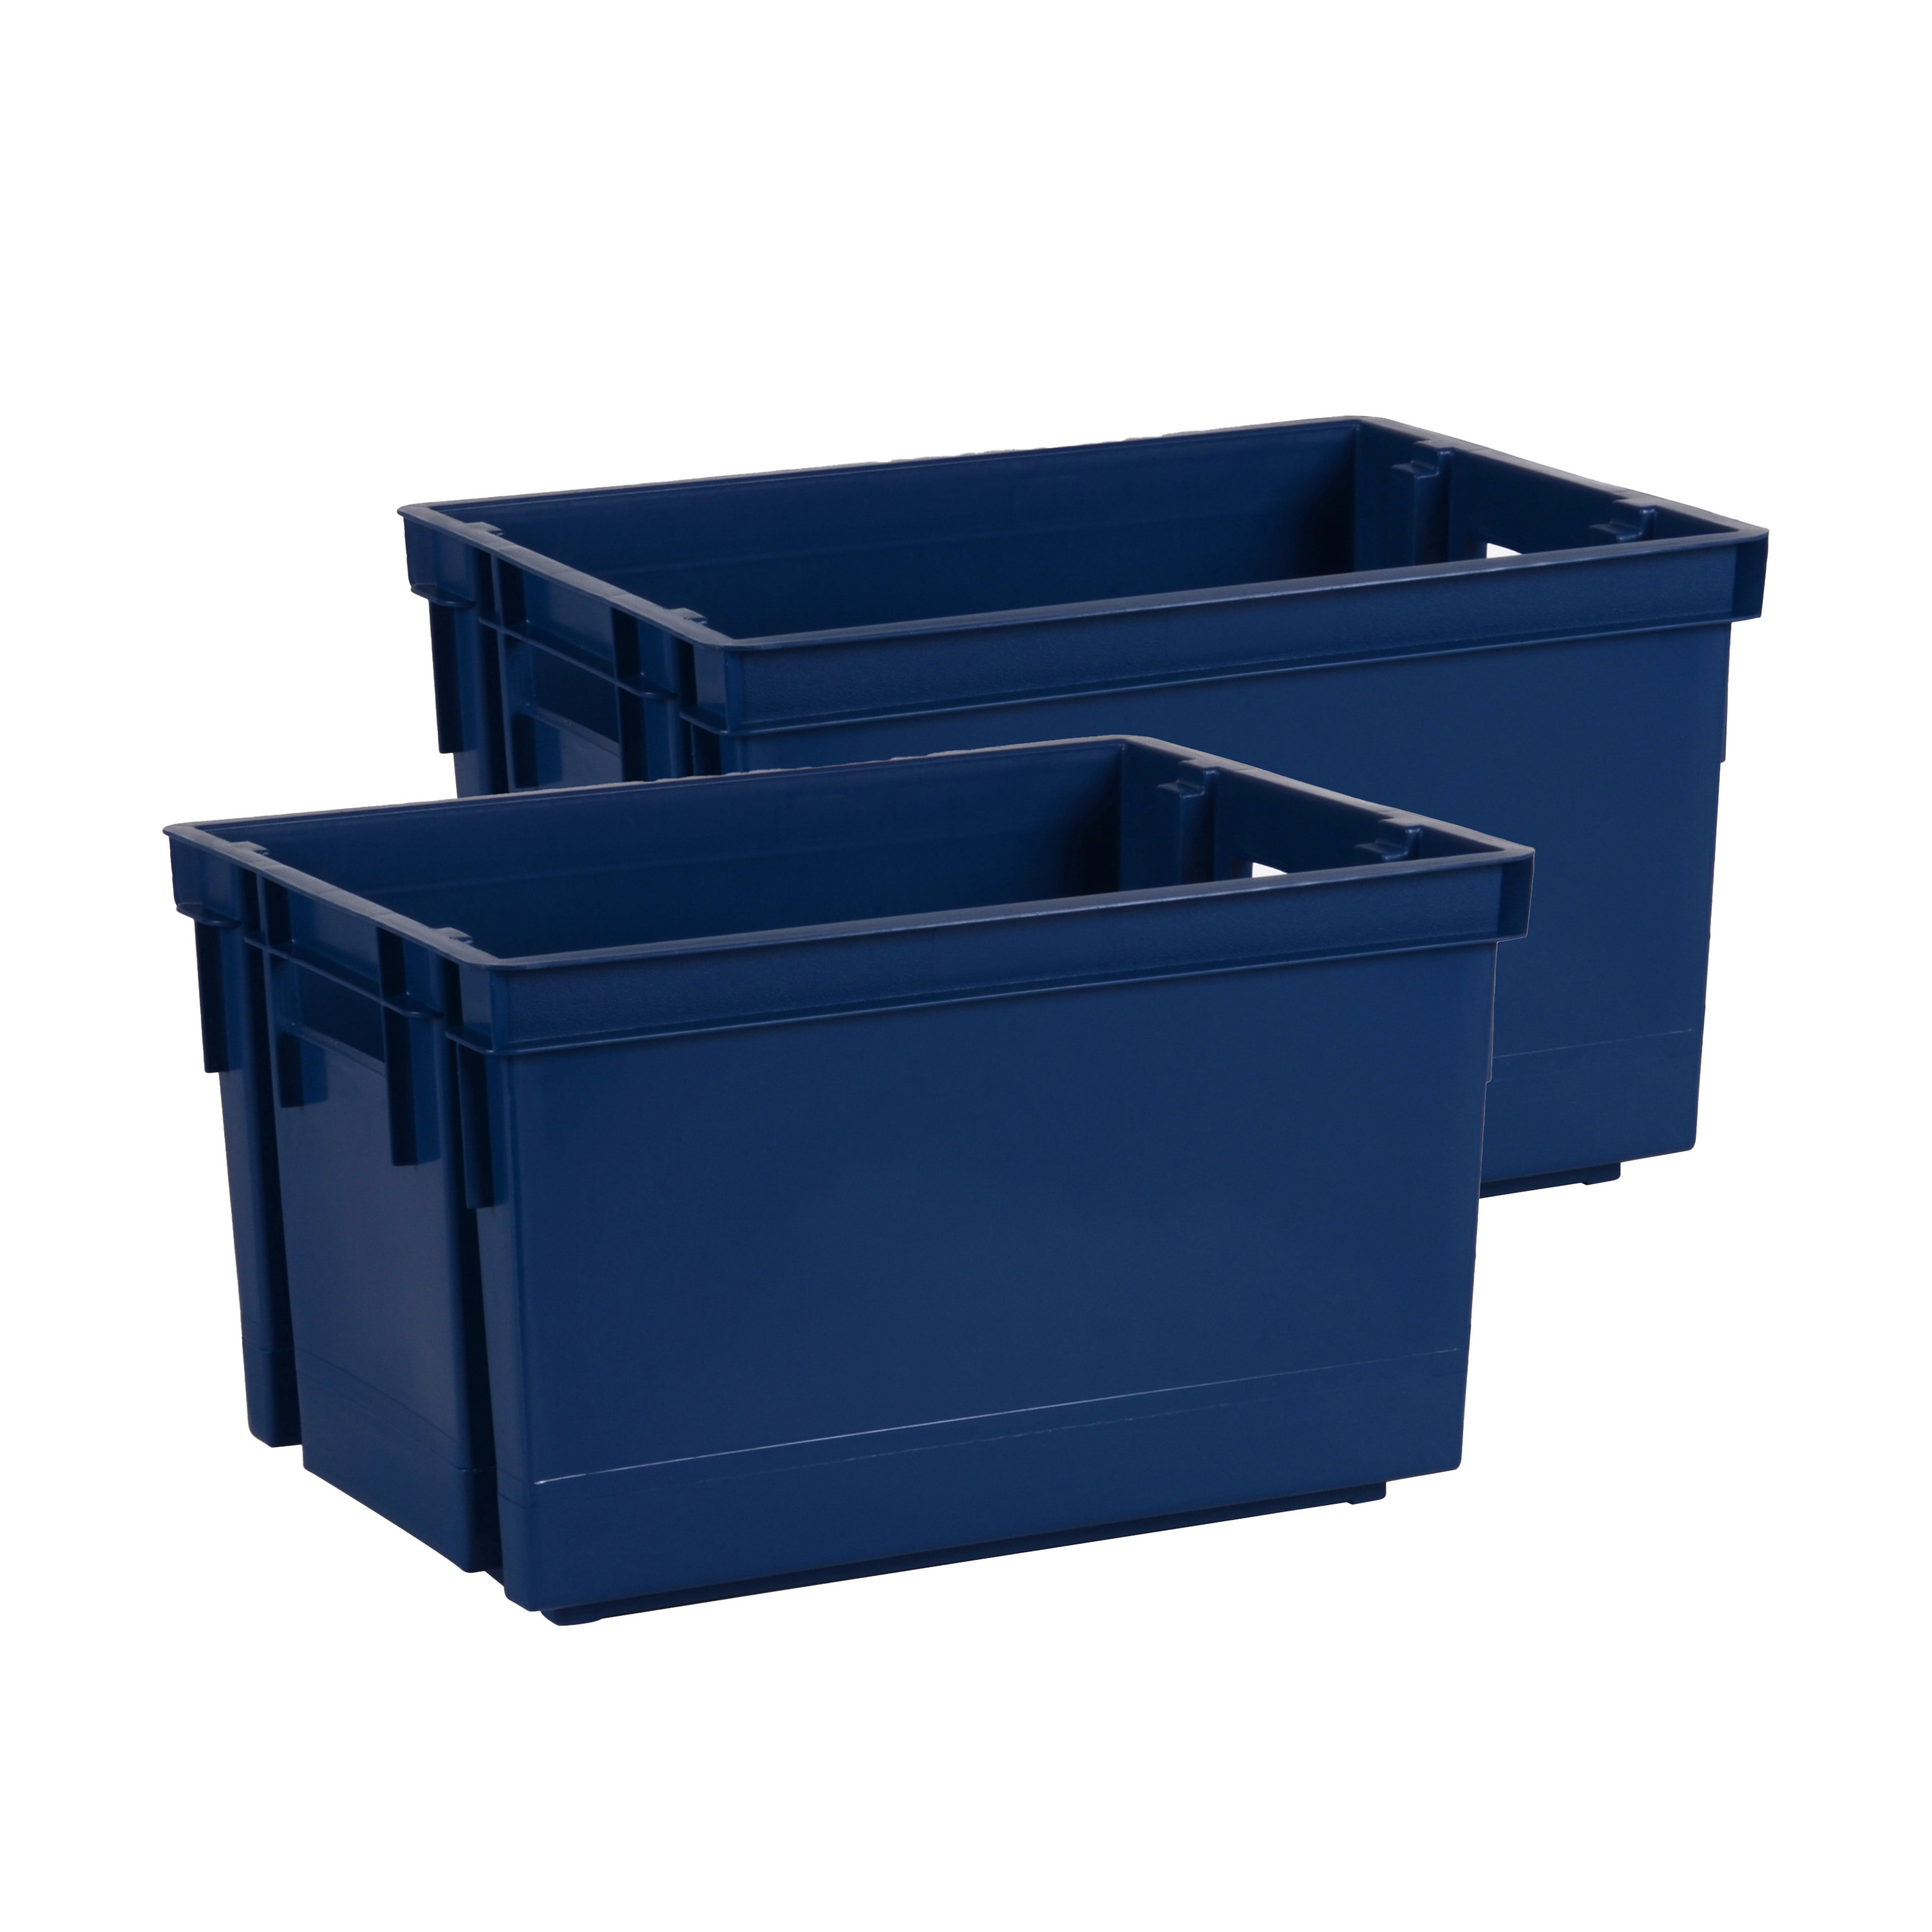 Opbergbox-opbergkrat 20 L 2x blauw kunststof 39 x 29 x 23 cm stapelbaar-nestbaar